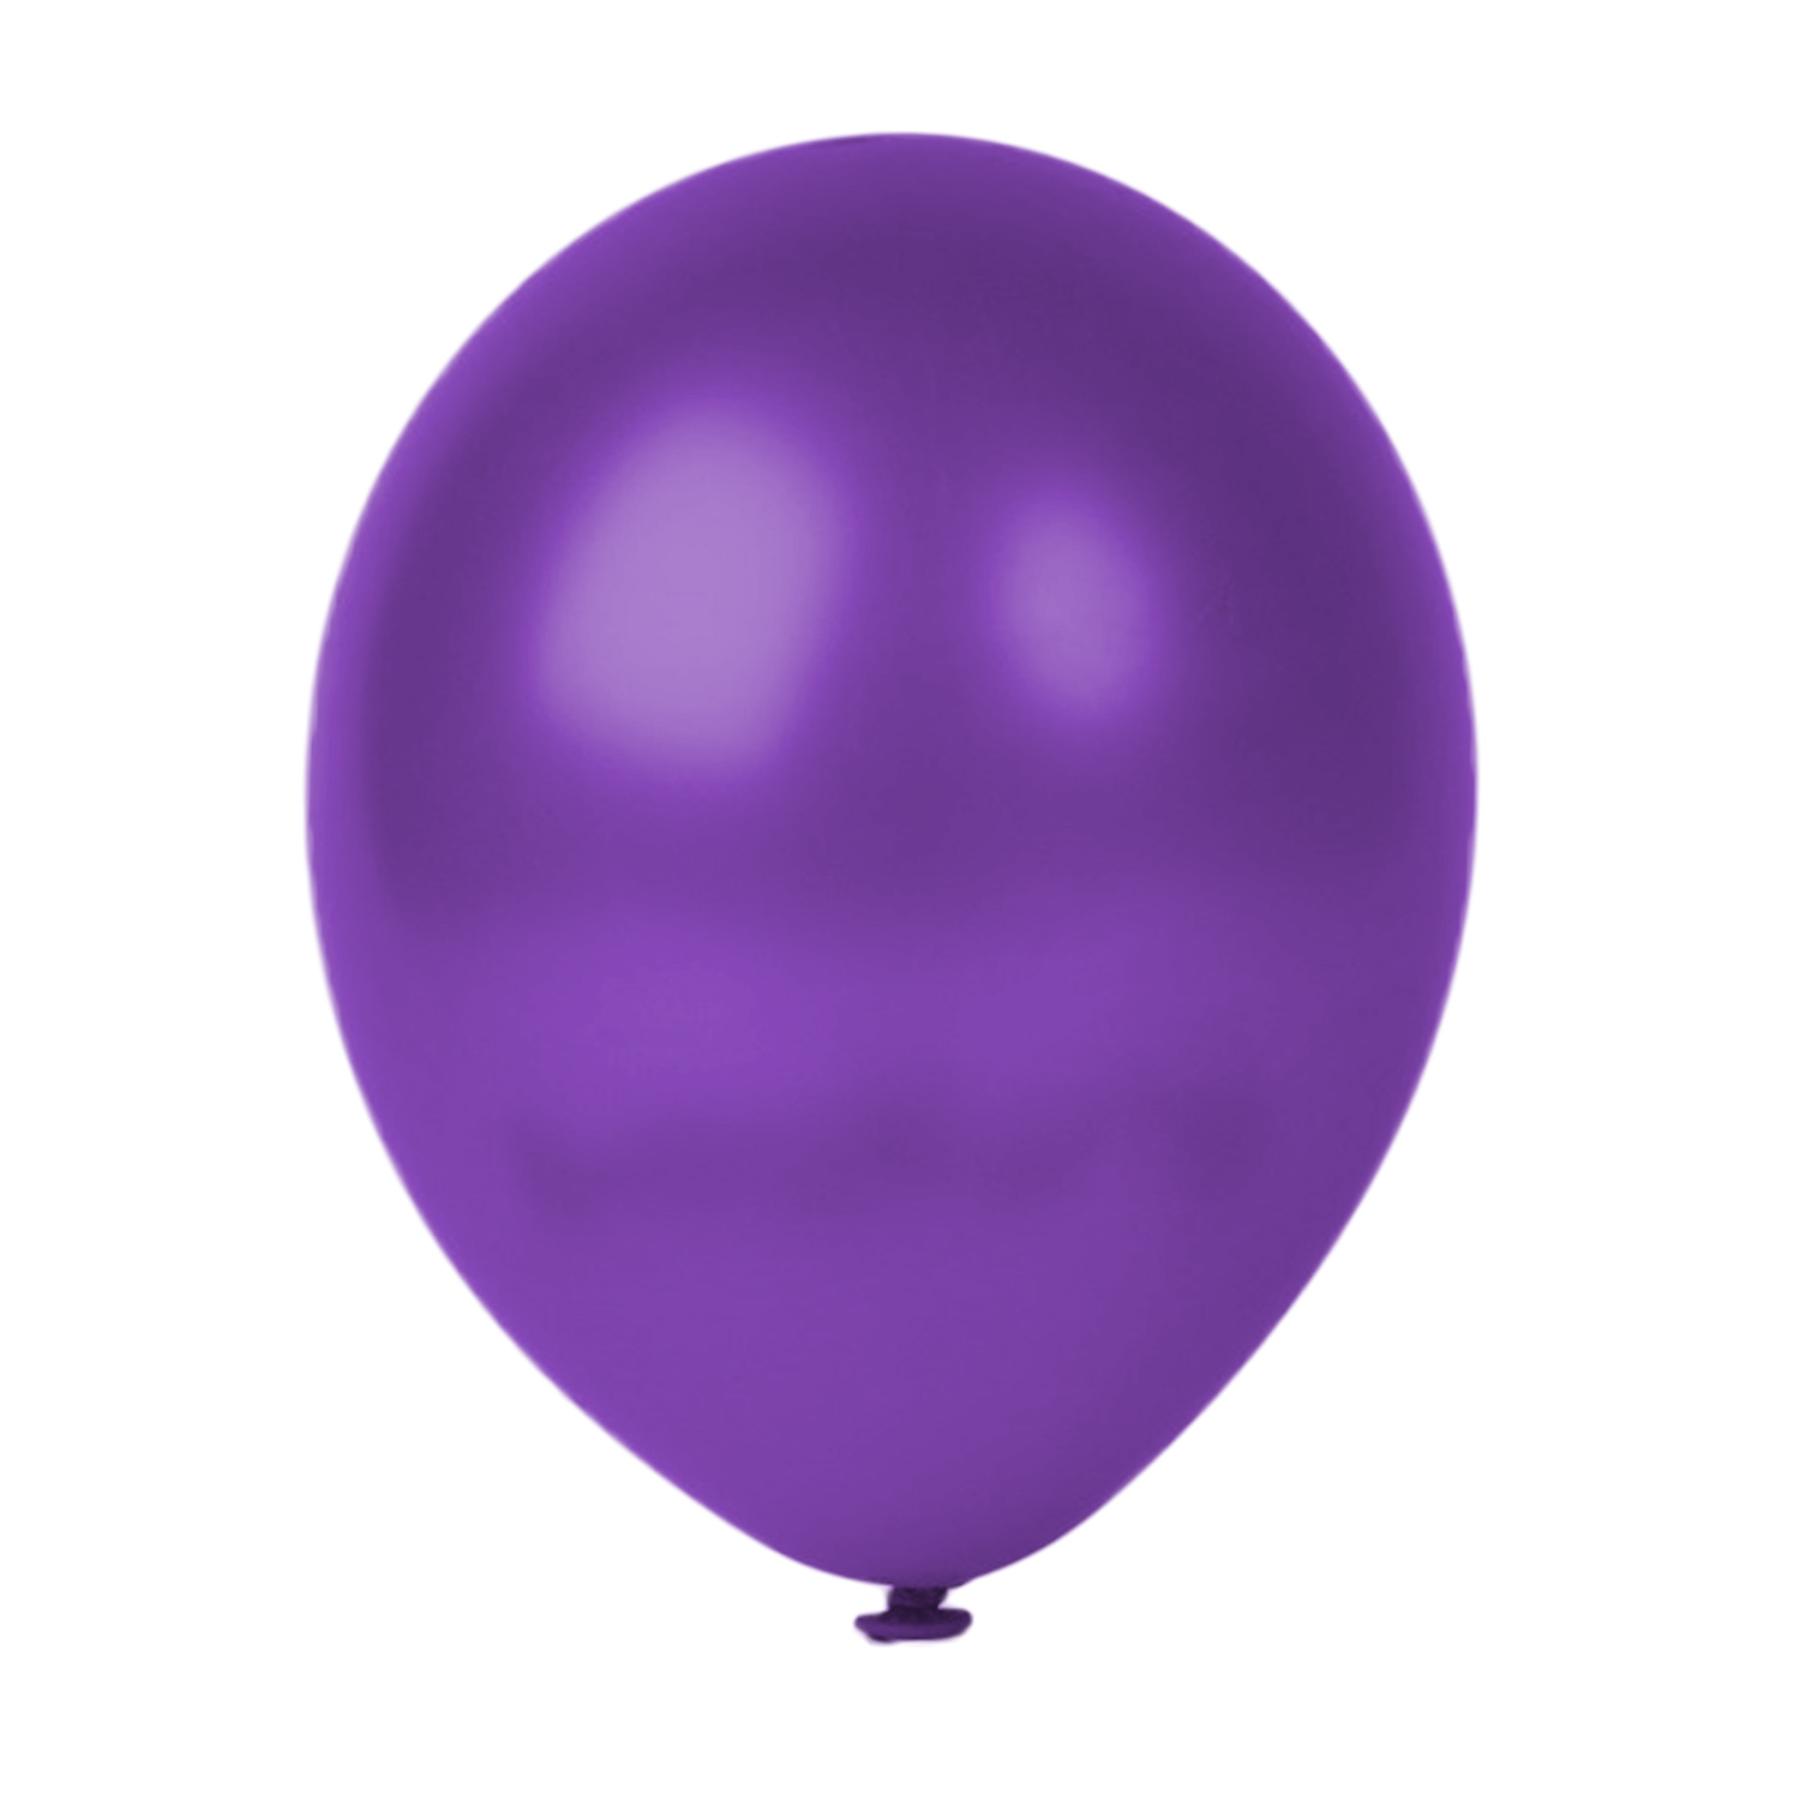 100er SET - Latex Luftballon - 12inch - Violett - Metallic (glänzend)